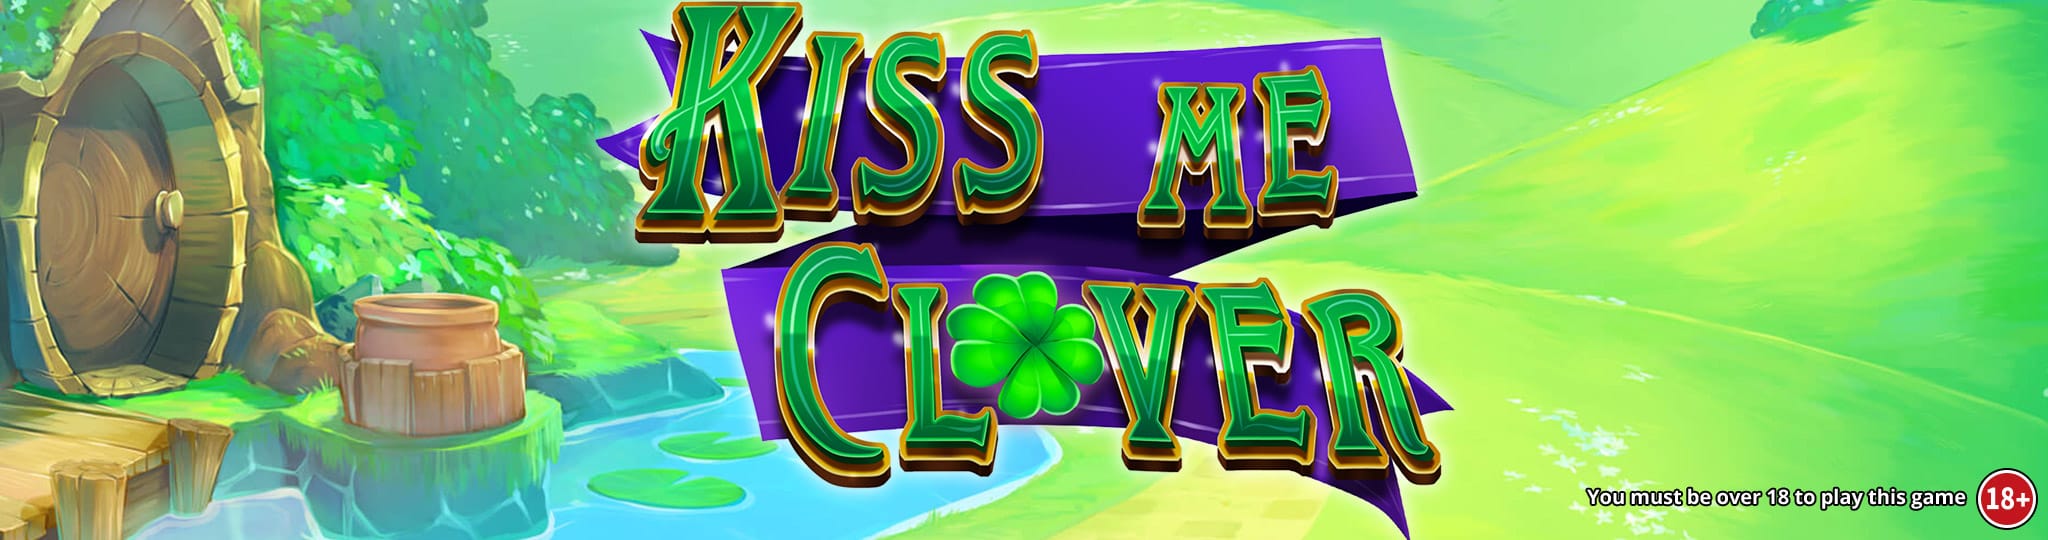 kiss me clover slots game logo